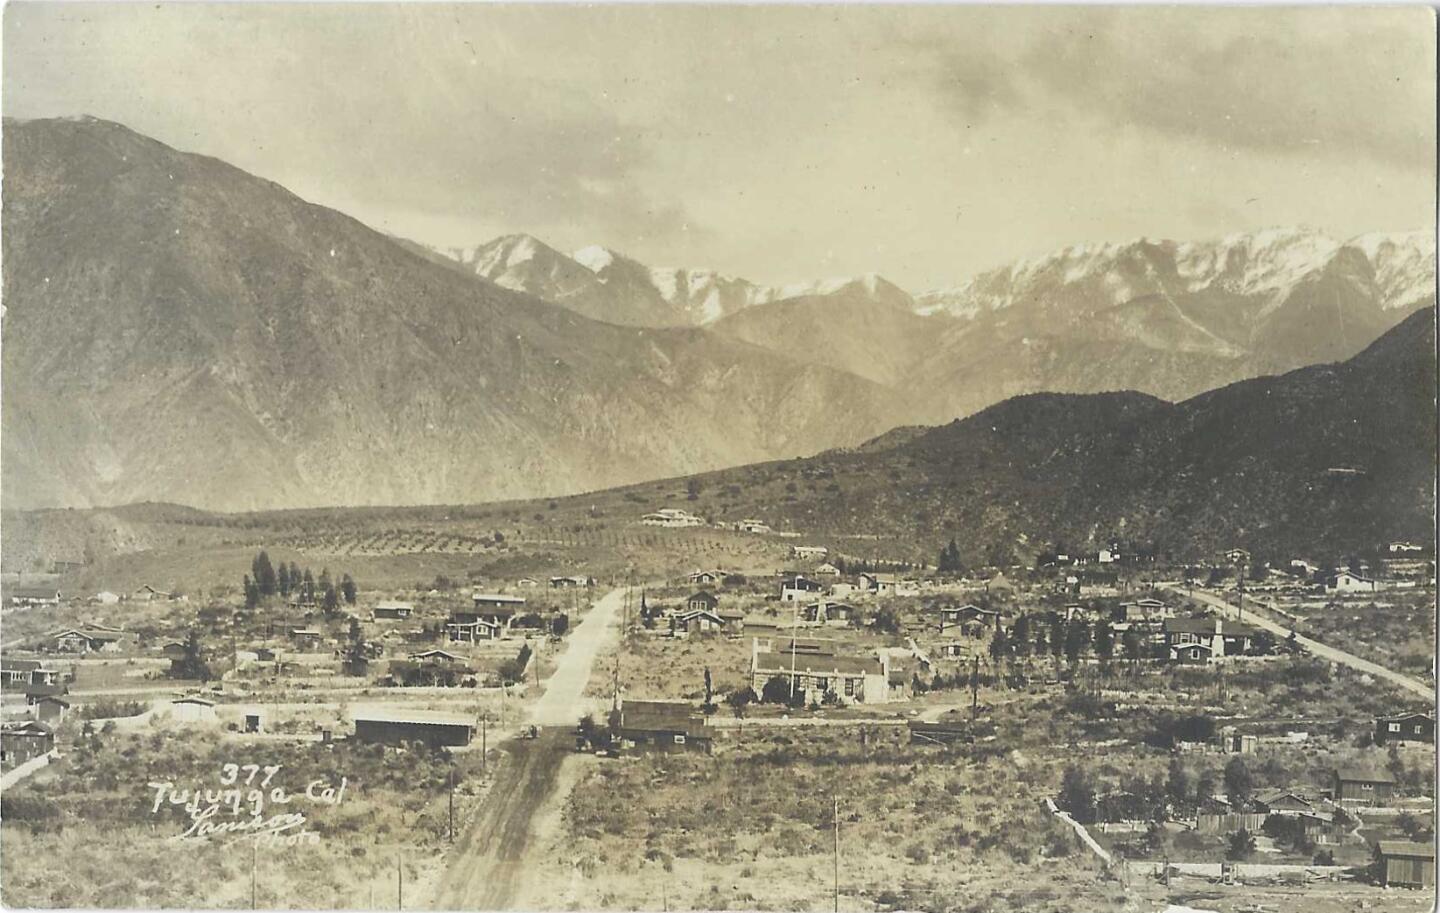 A vintage postcard shows the mountain vistas of Tujunga